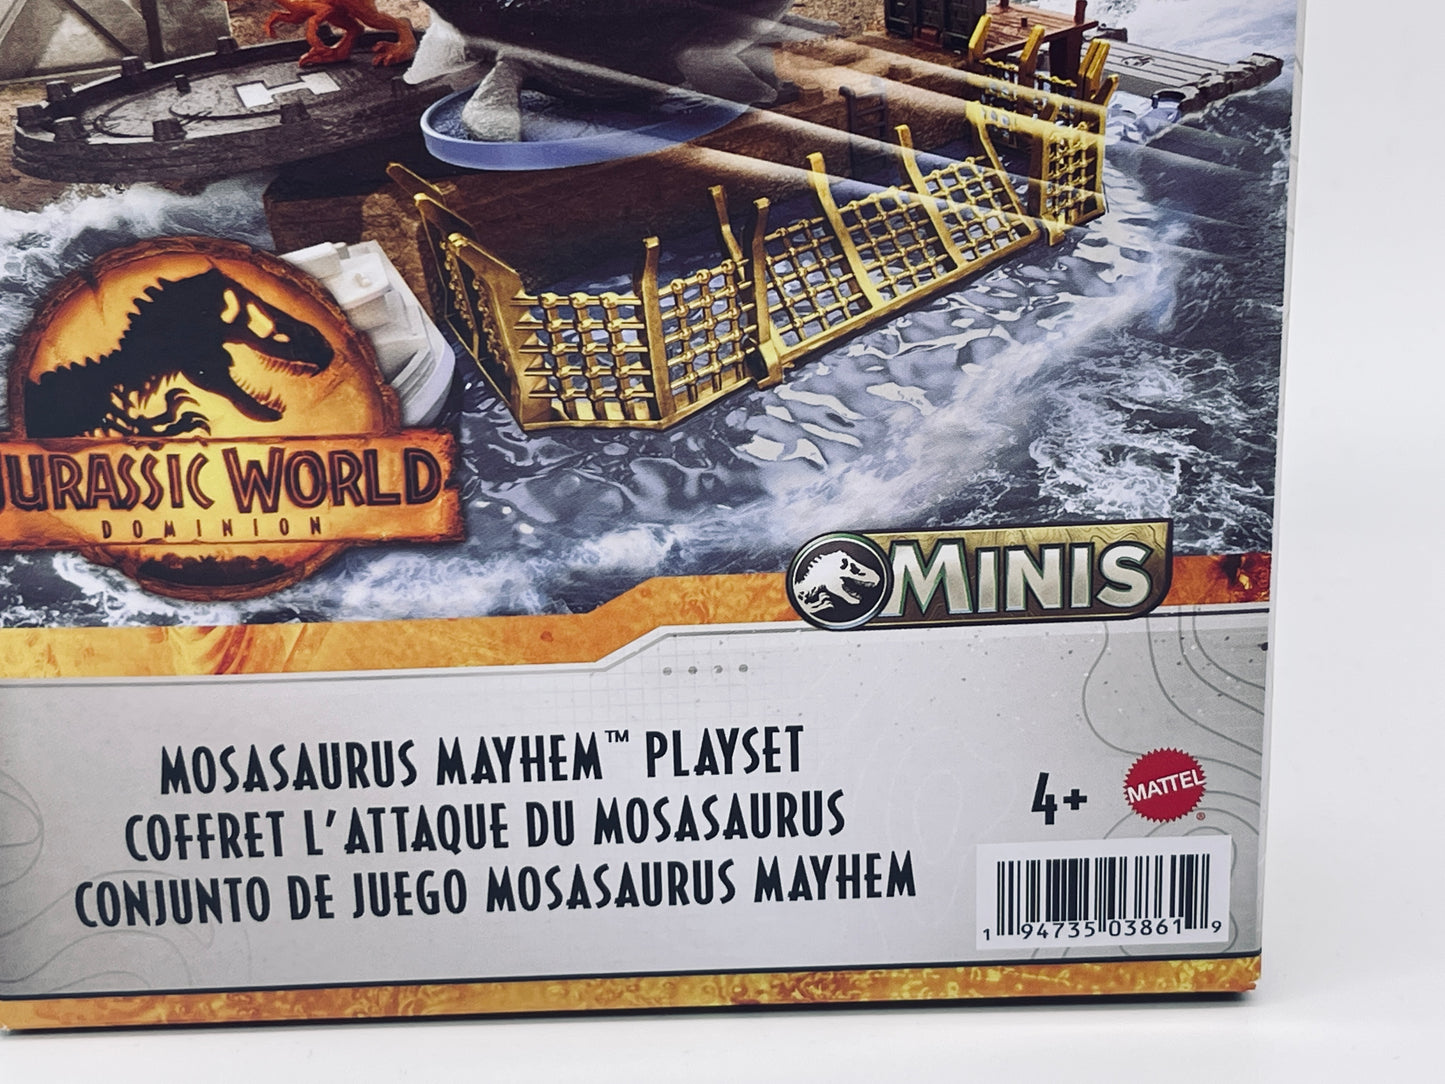 Jurassic World Dominion Minis Mosasaurus Chaos Spielset Launch & Destroy (Mattel)